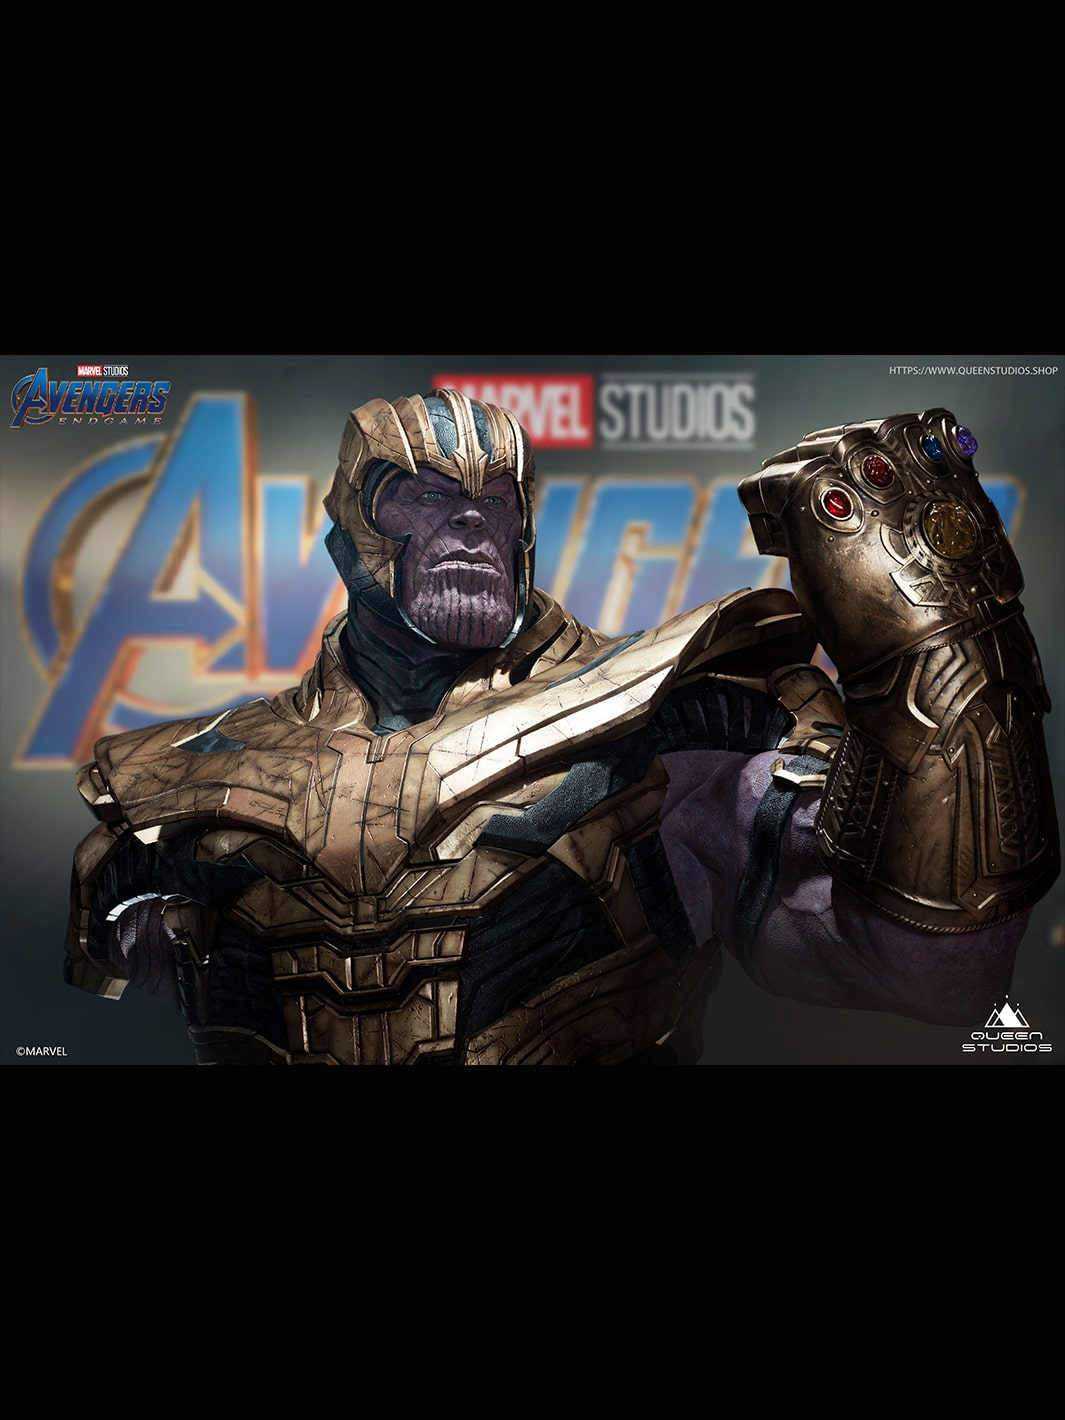 Avengers: Endgame, arriva la statua di Thanos in scala 1:1